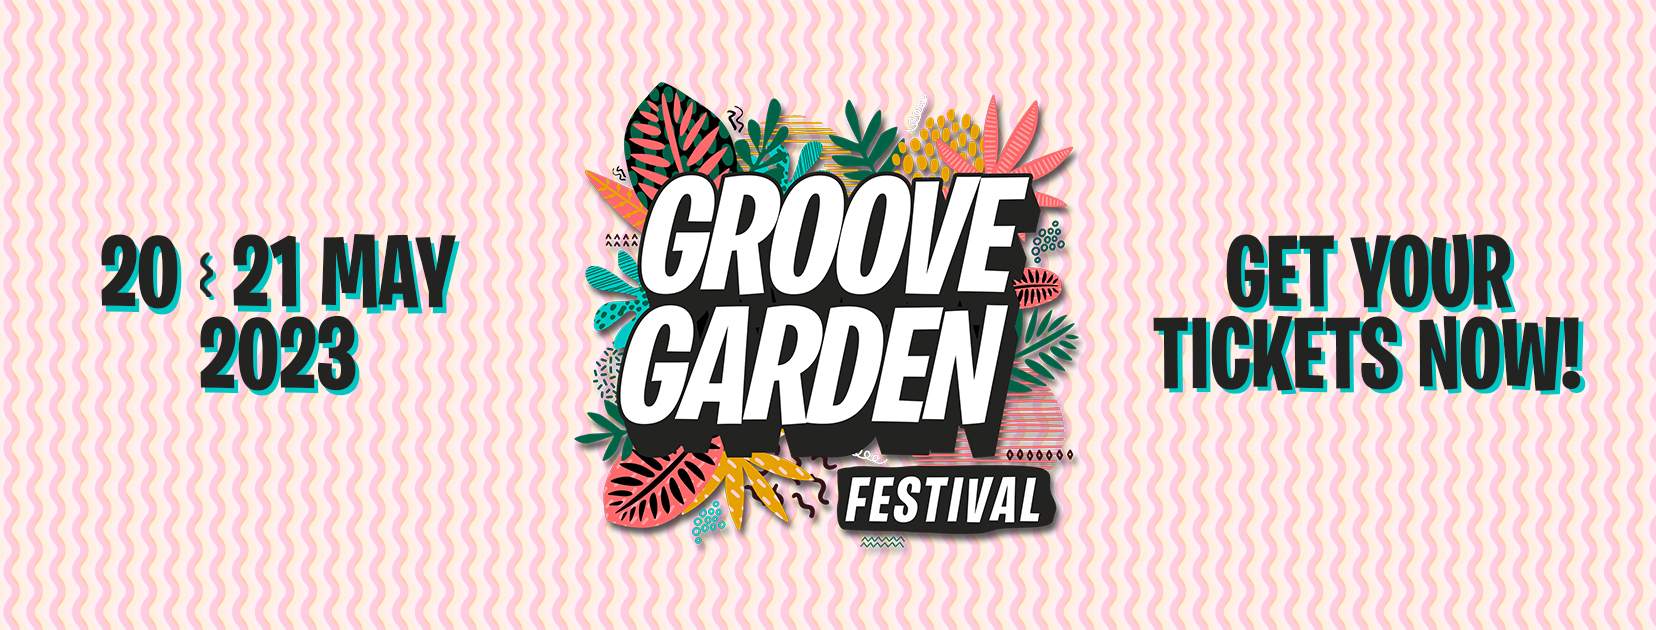 Groove Garden Festival 2023 - フライヤー表